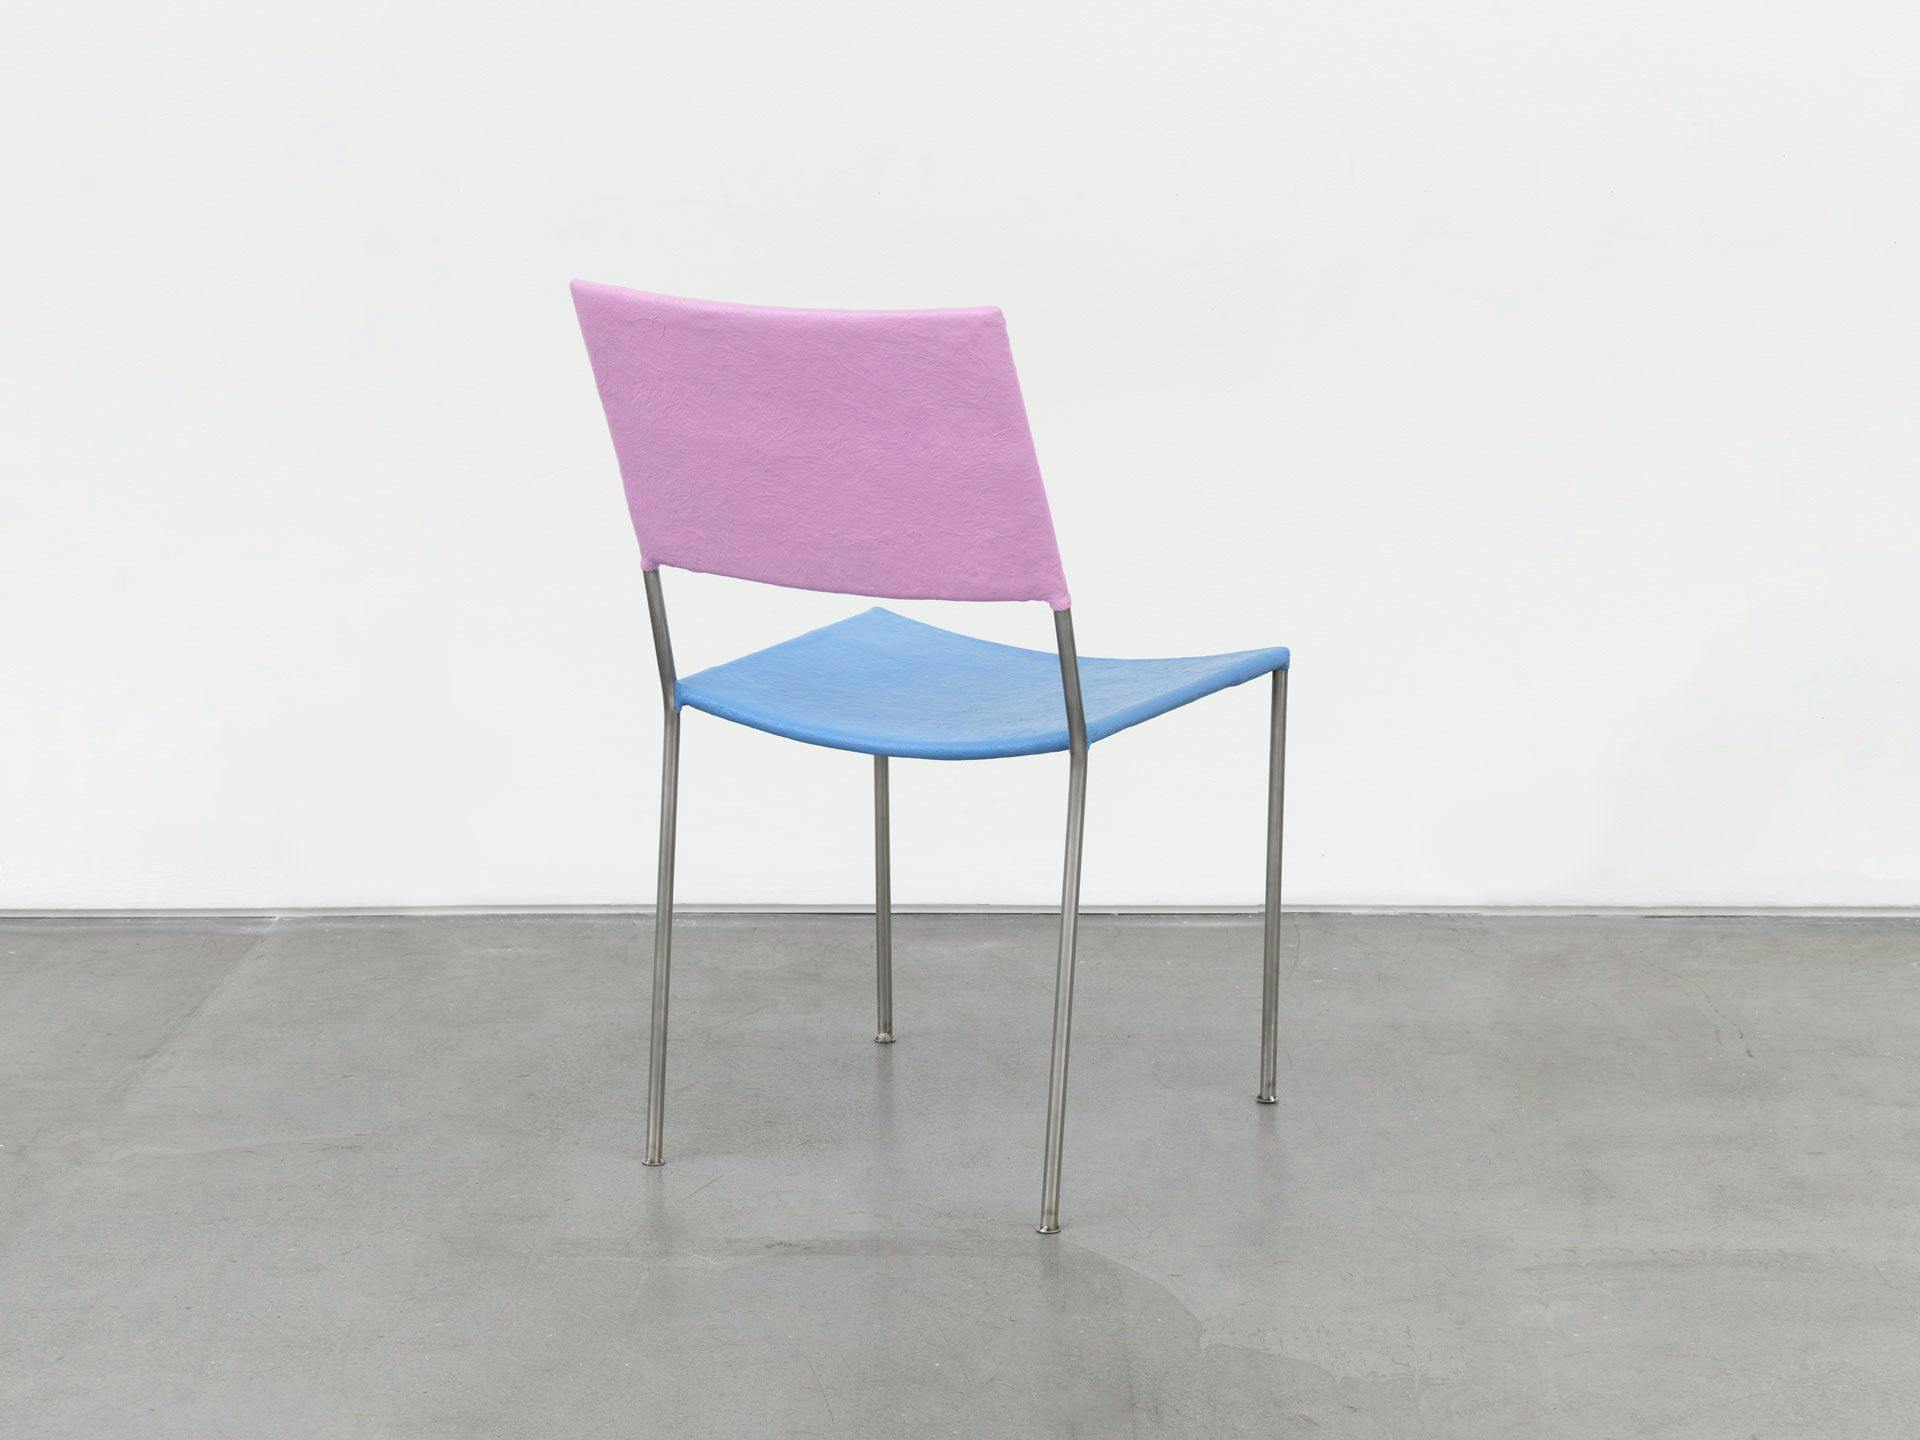 A furniture work by Franz West, titled Künstlerstuhl (Artist's Chair), dated 2006/2015